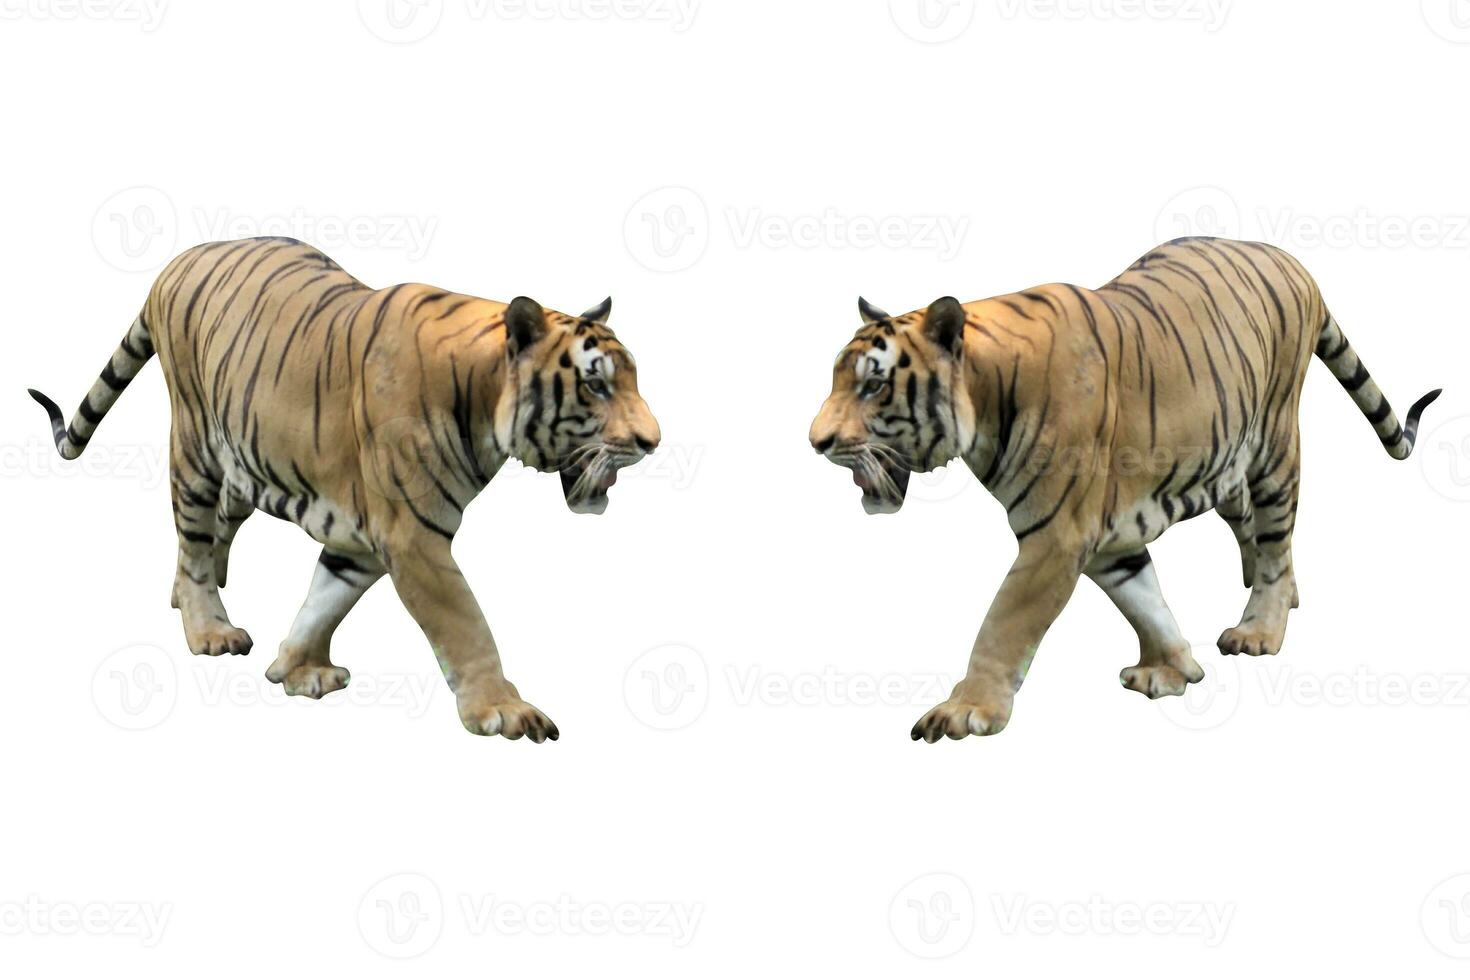 tigre dentro jardim zoológico em branco fundo foto